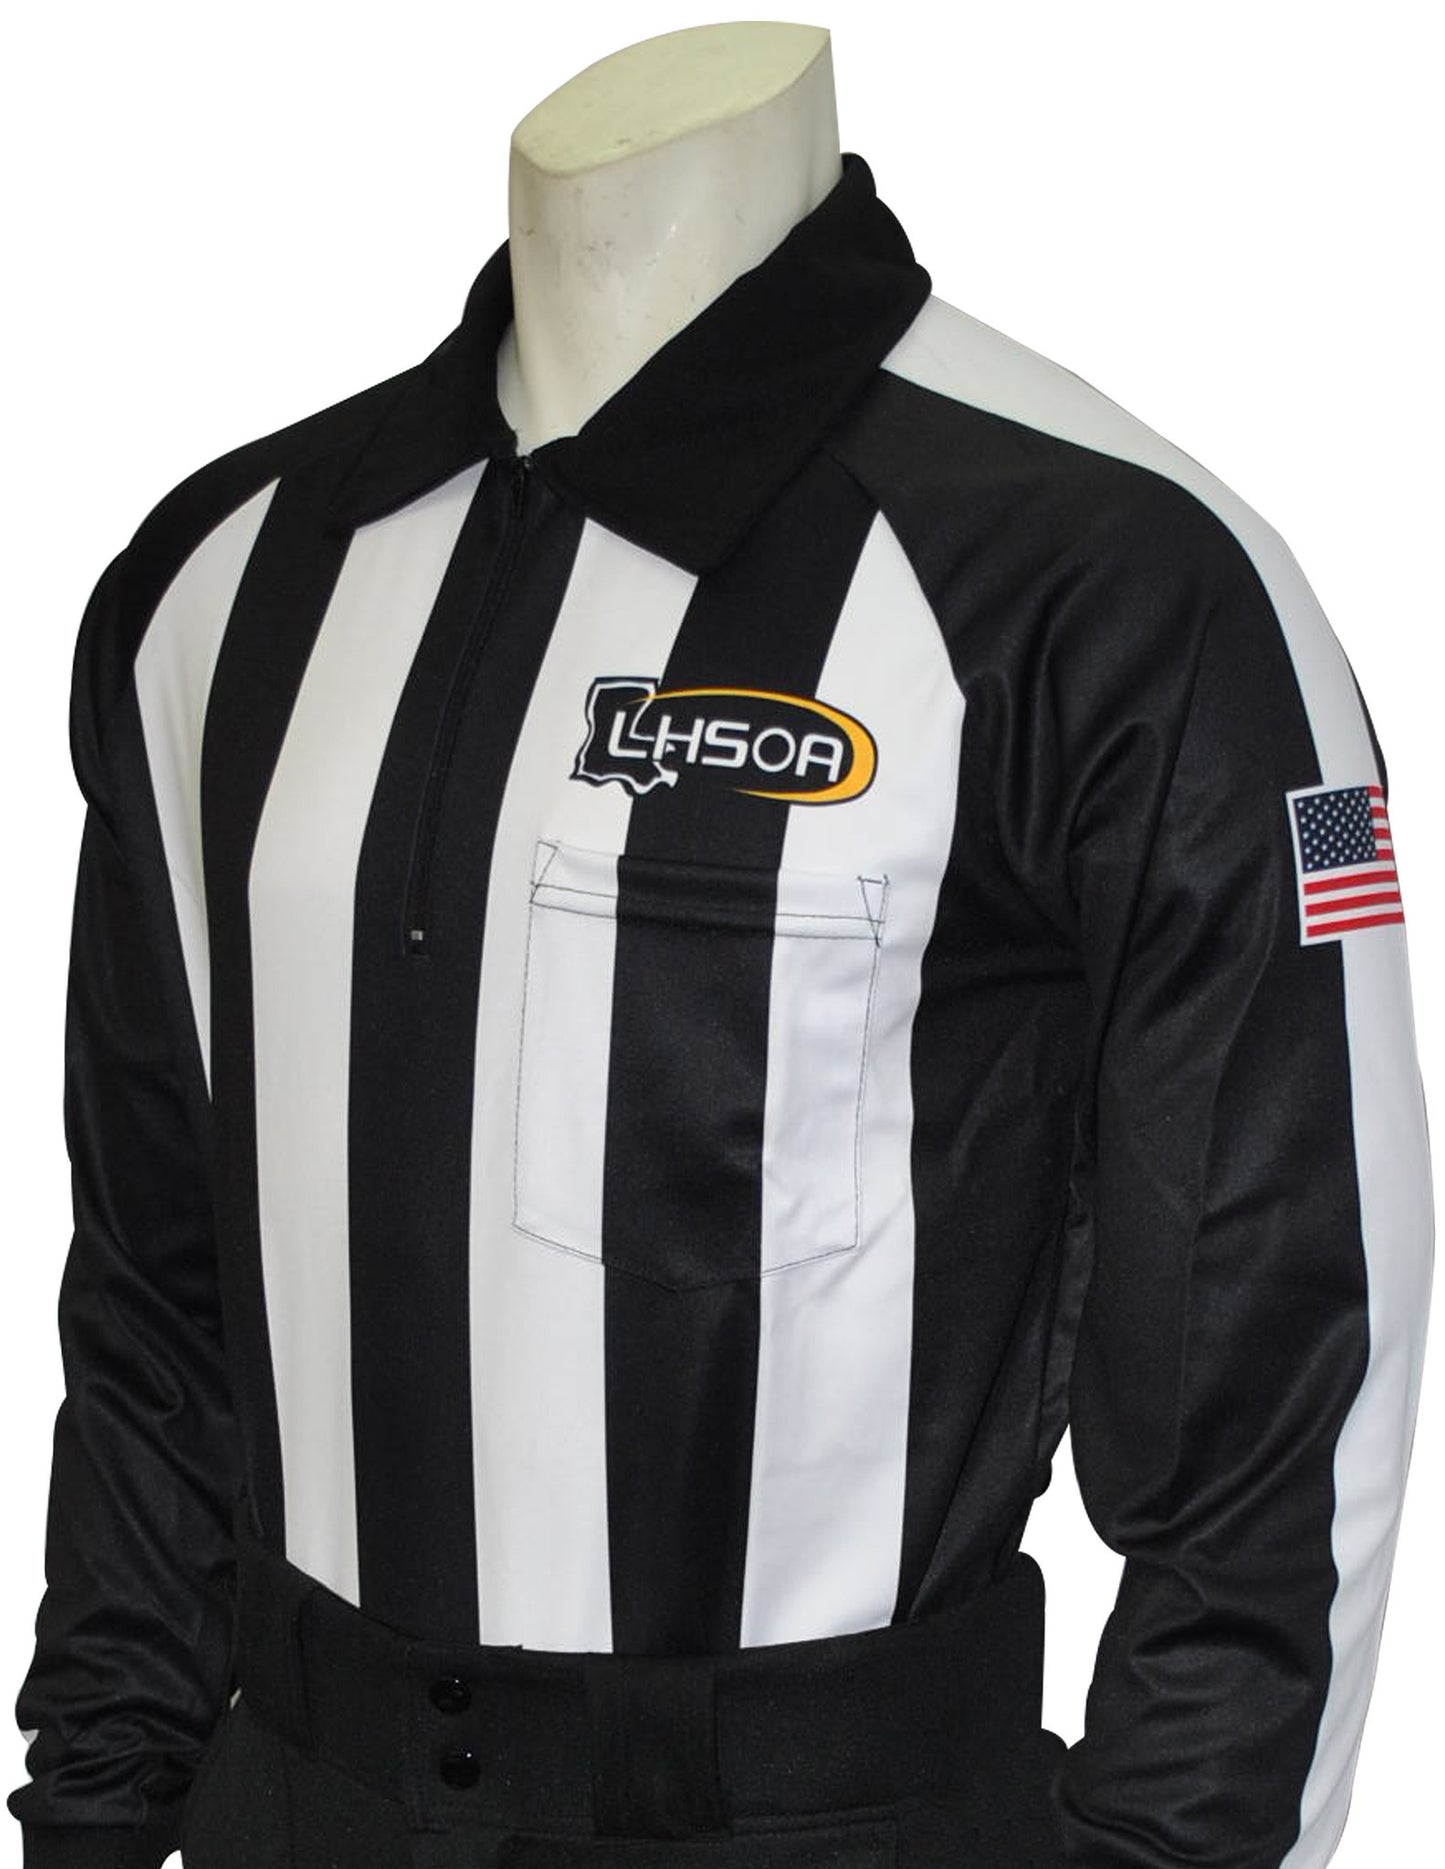 USA156LA- Smitty USA - Dye Sub Louisiana Football Long Sleeve Shirt